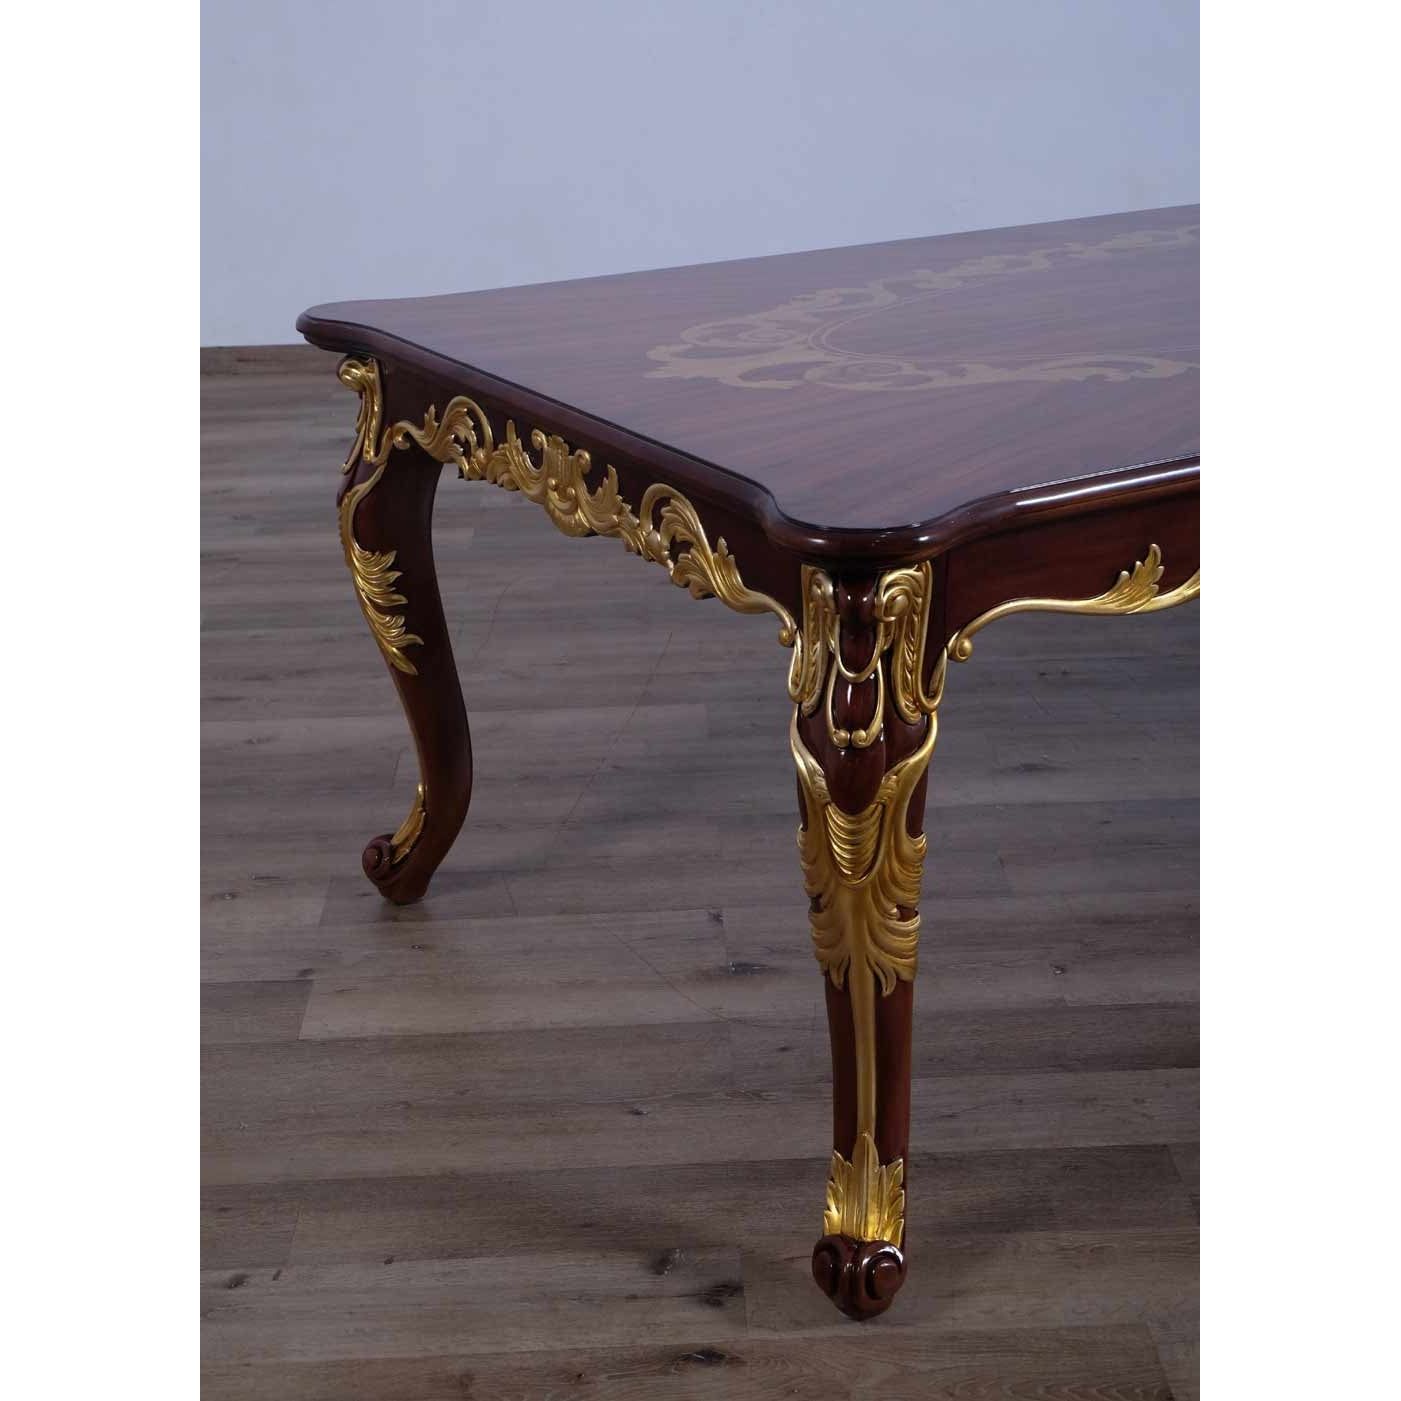 European Furniture - Luxor 5 Piece Luxury Dining Table Set in Green & Light Gold - 68582-68582EM-5SET - New Star Living